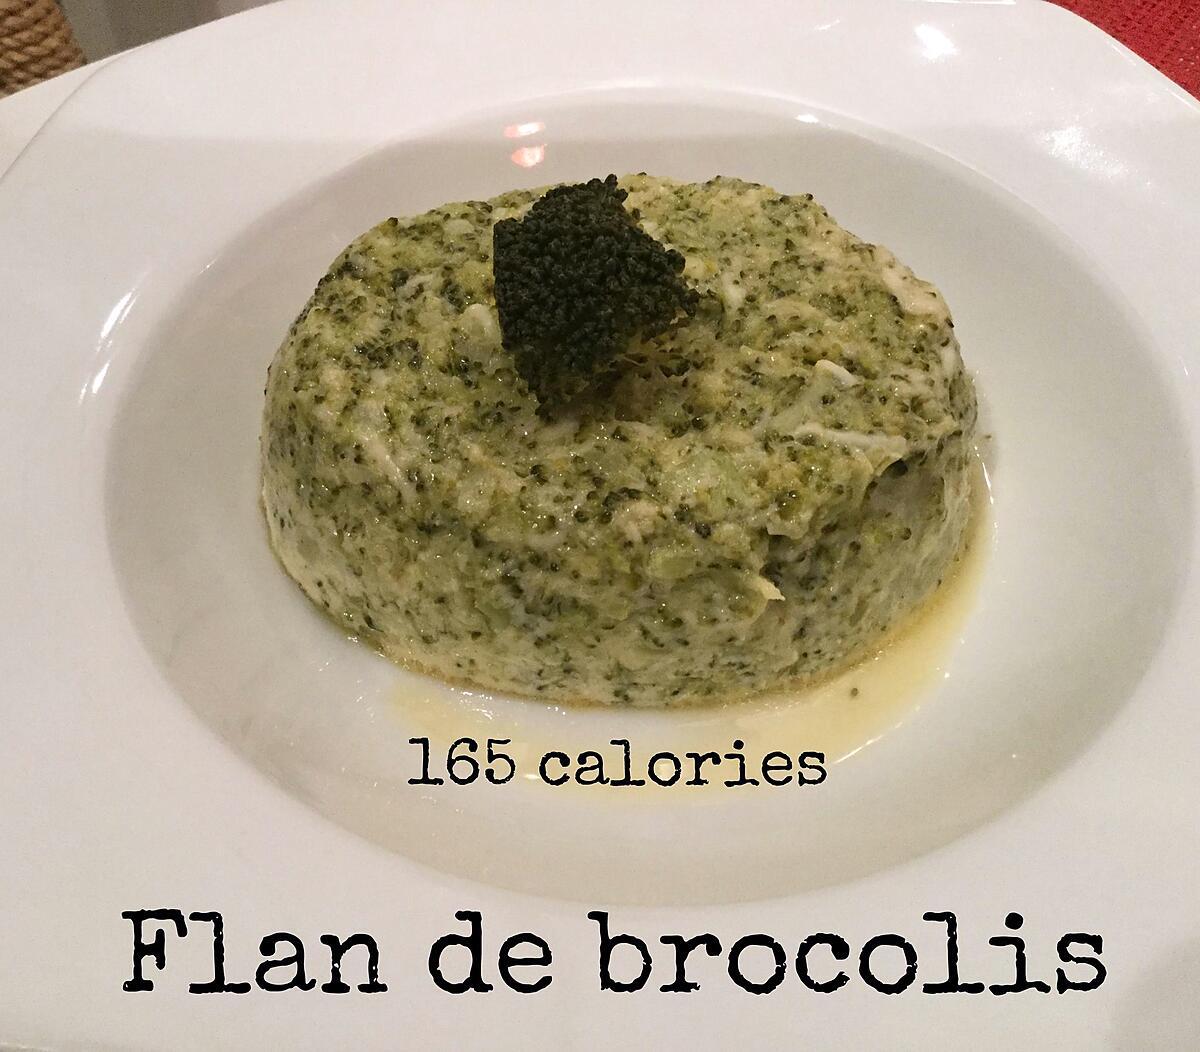 recette FLAN DE BROCOLIS